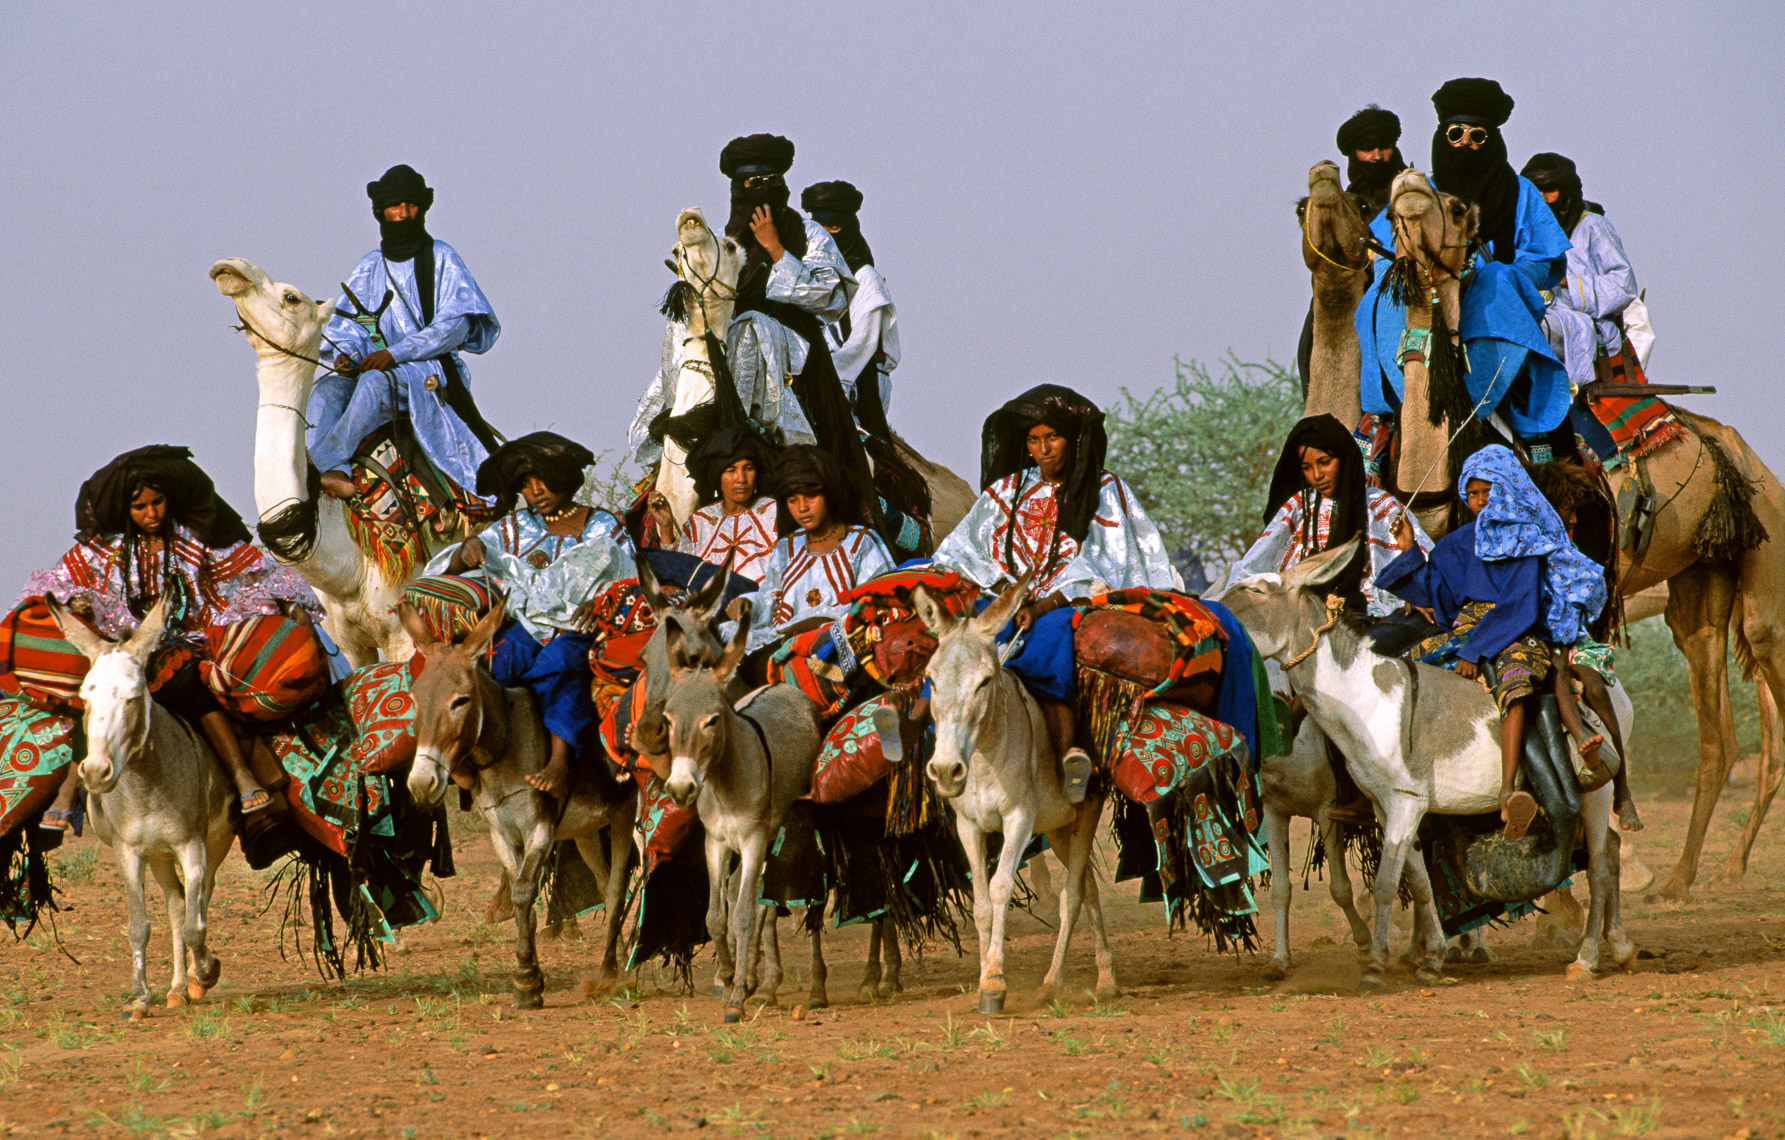 Arrival of Tuareg Wedding Guests